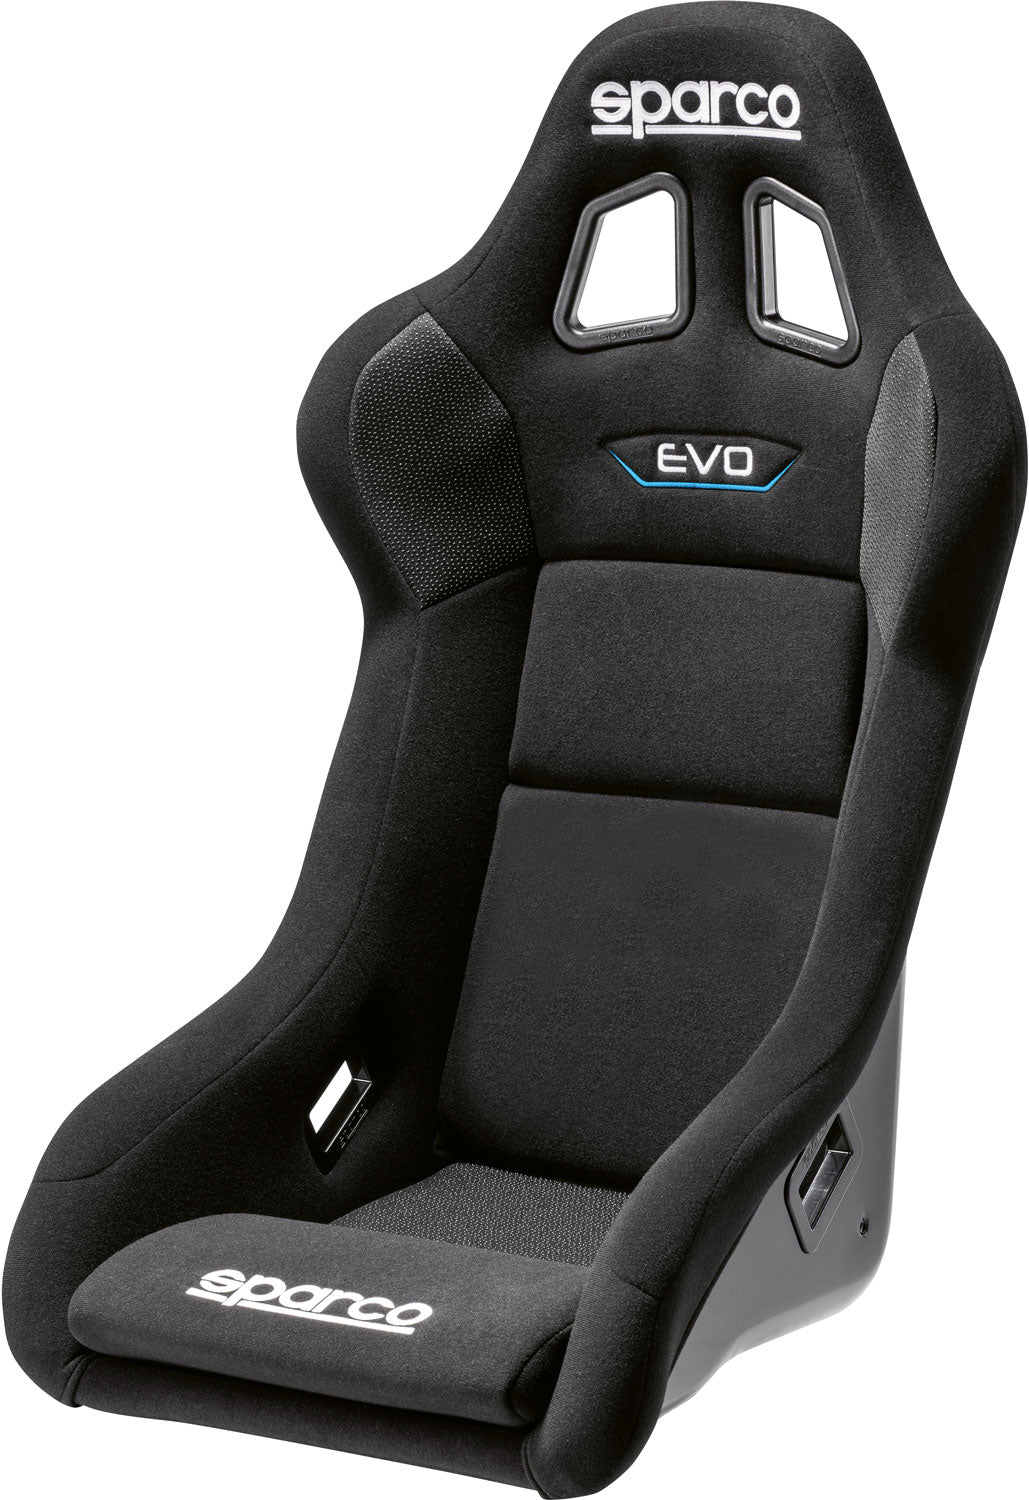 Sparco EVO QRT racing seat